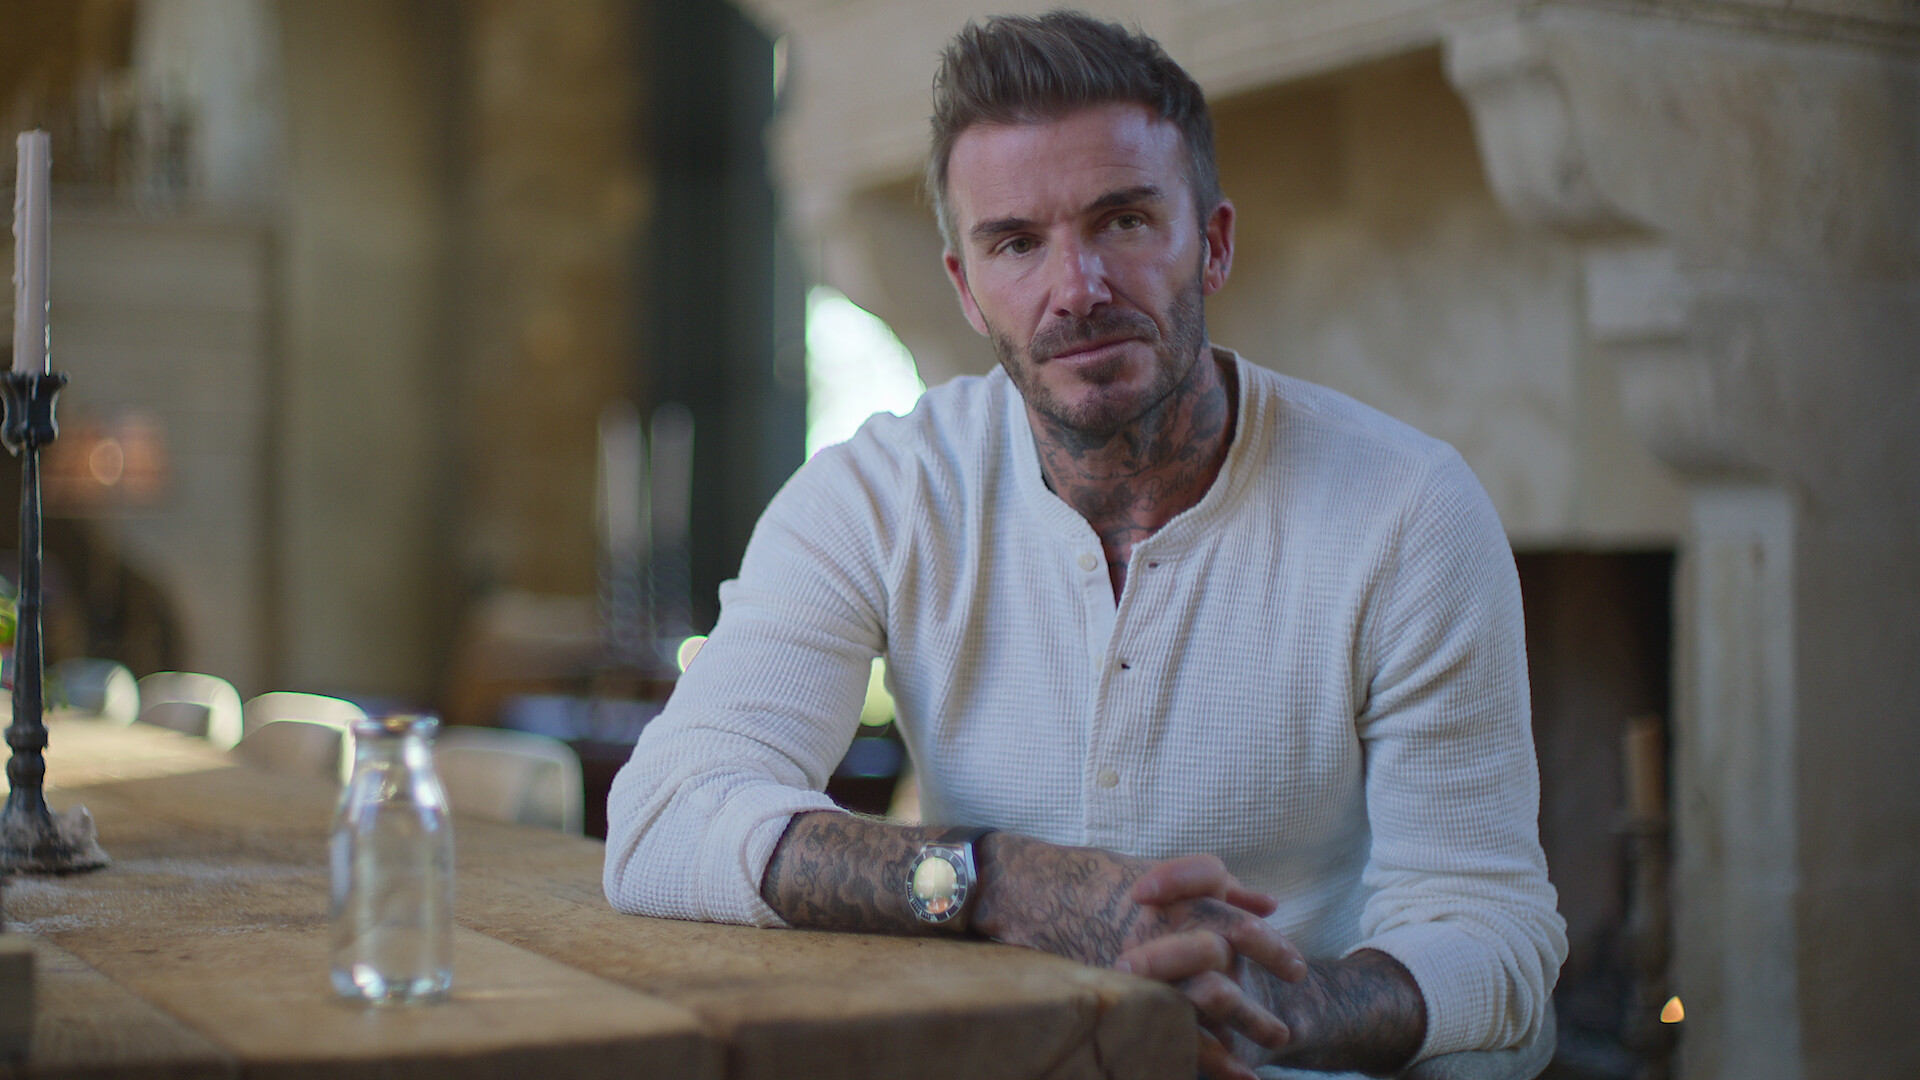 David Beckham in his Netflix documentary